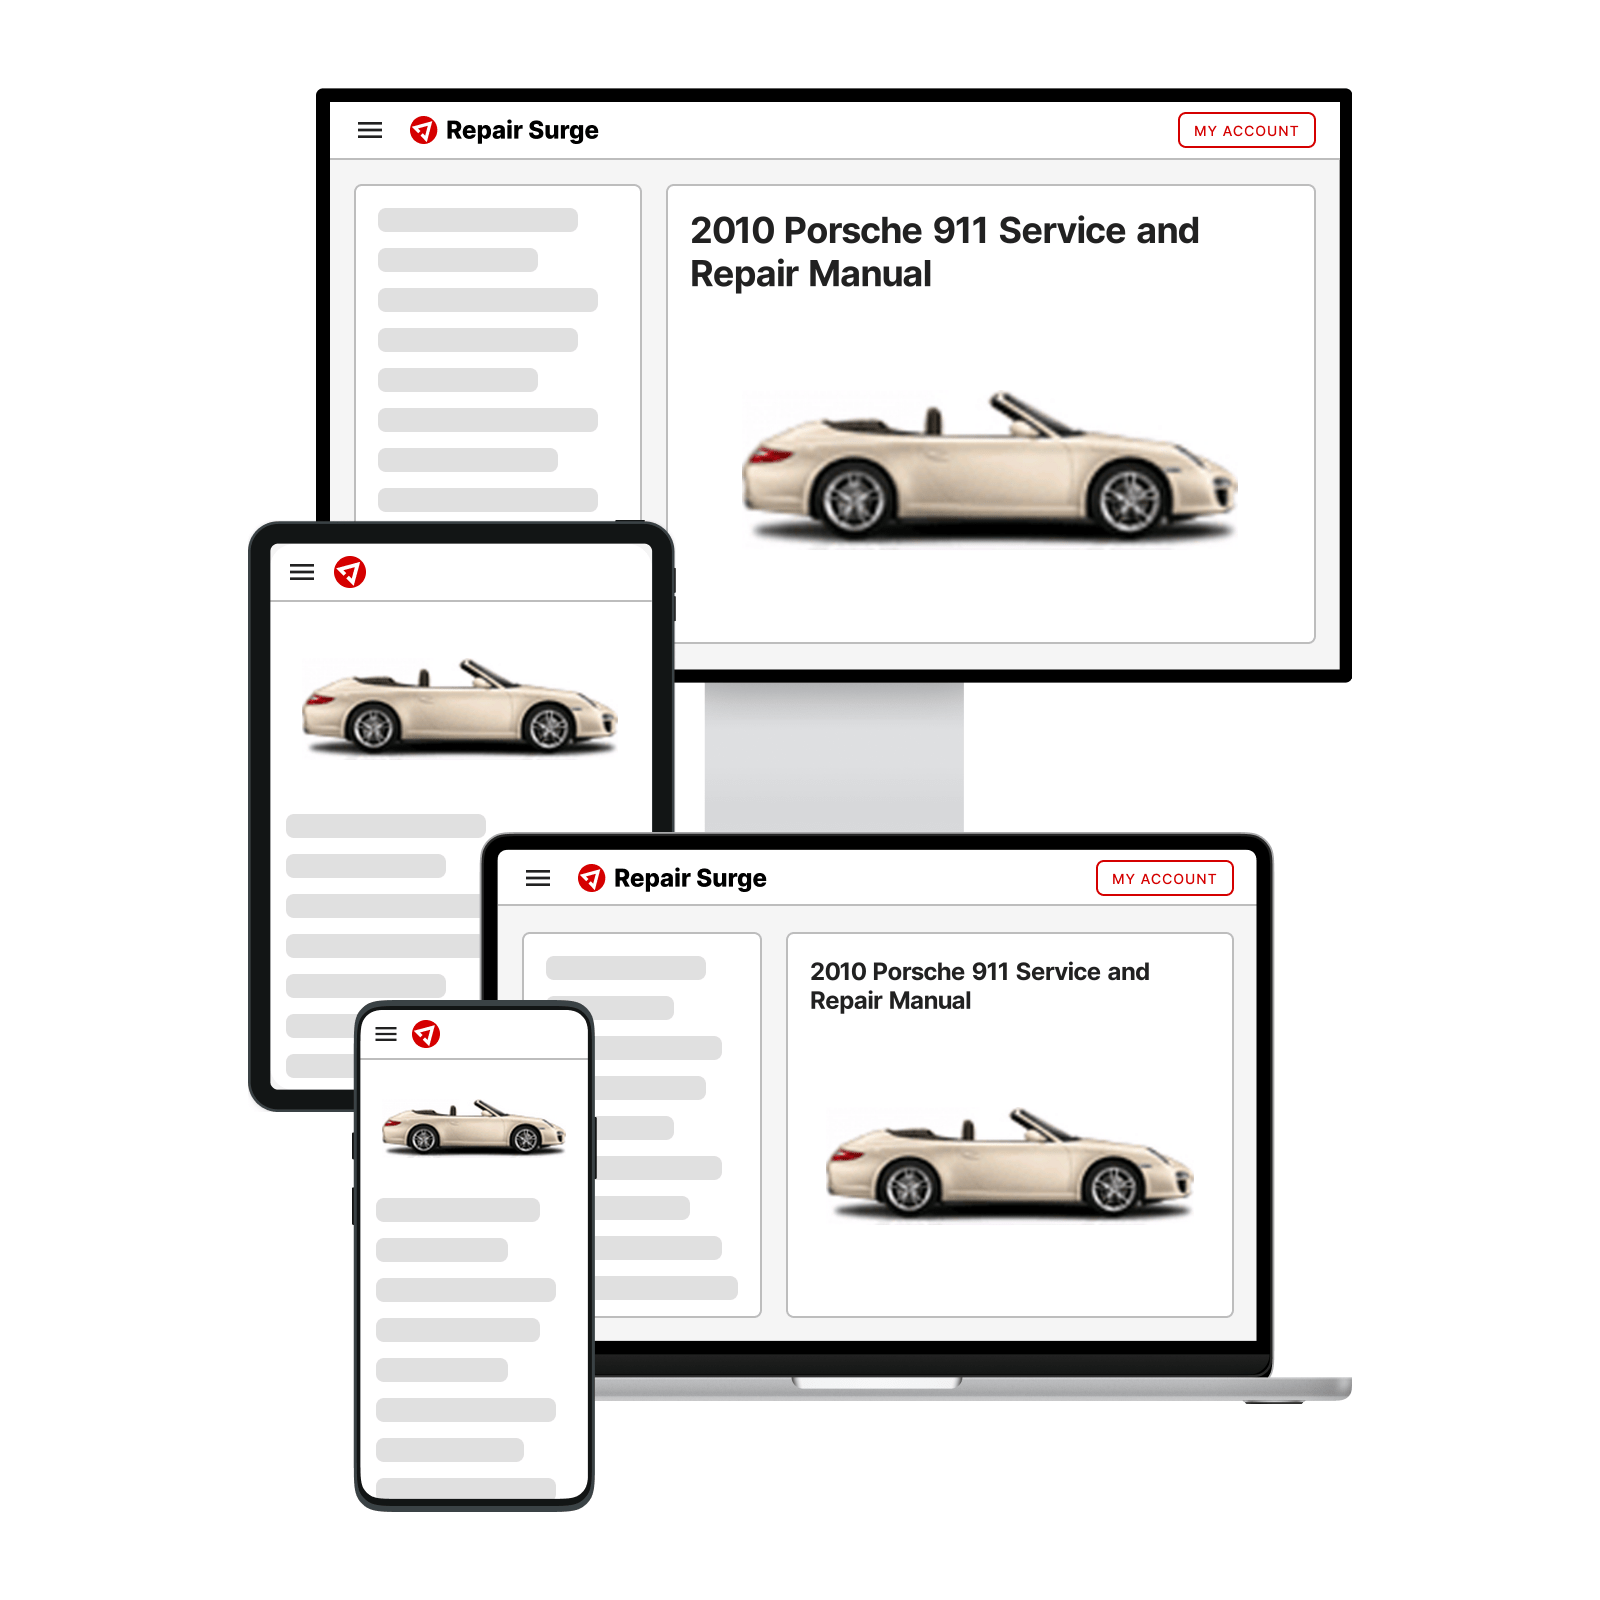 2010 Porsche 911 service and repair manual hero image